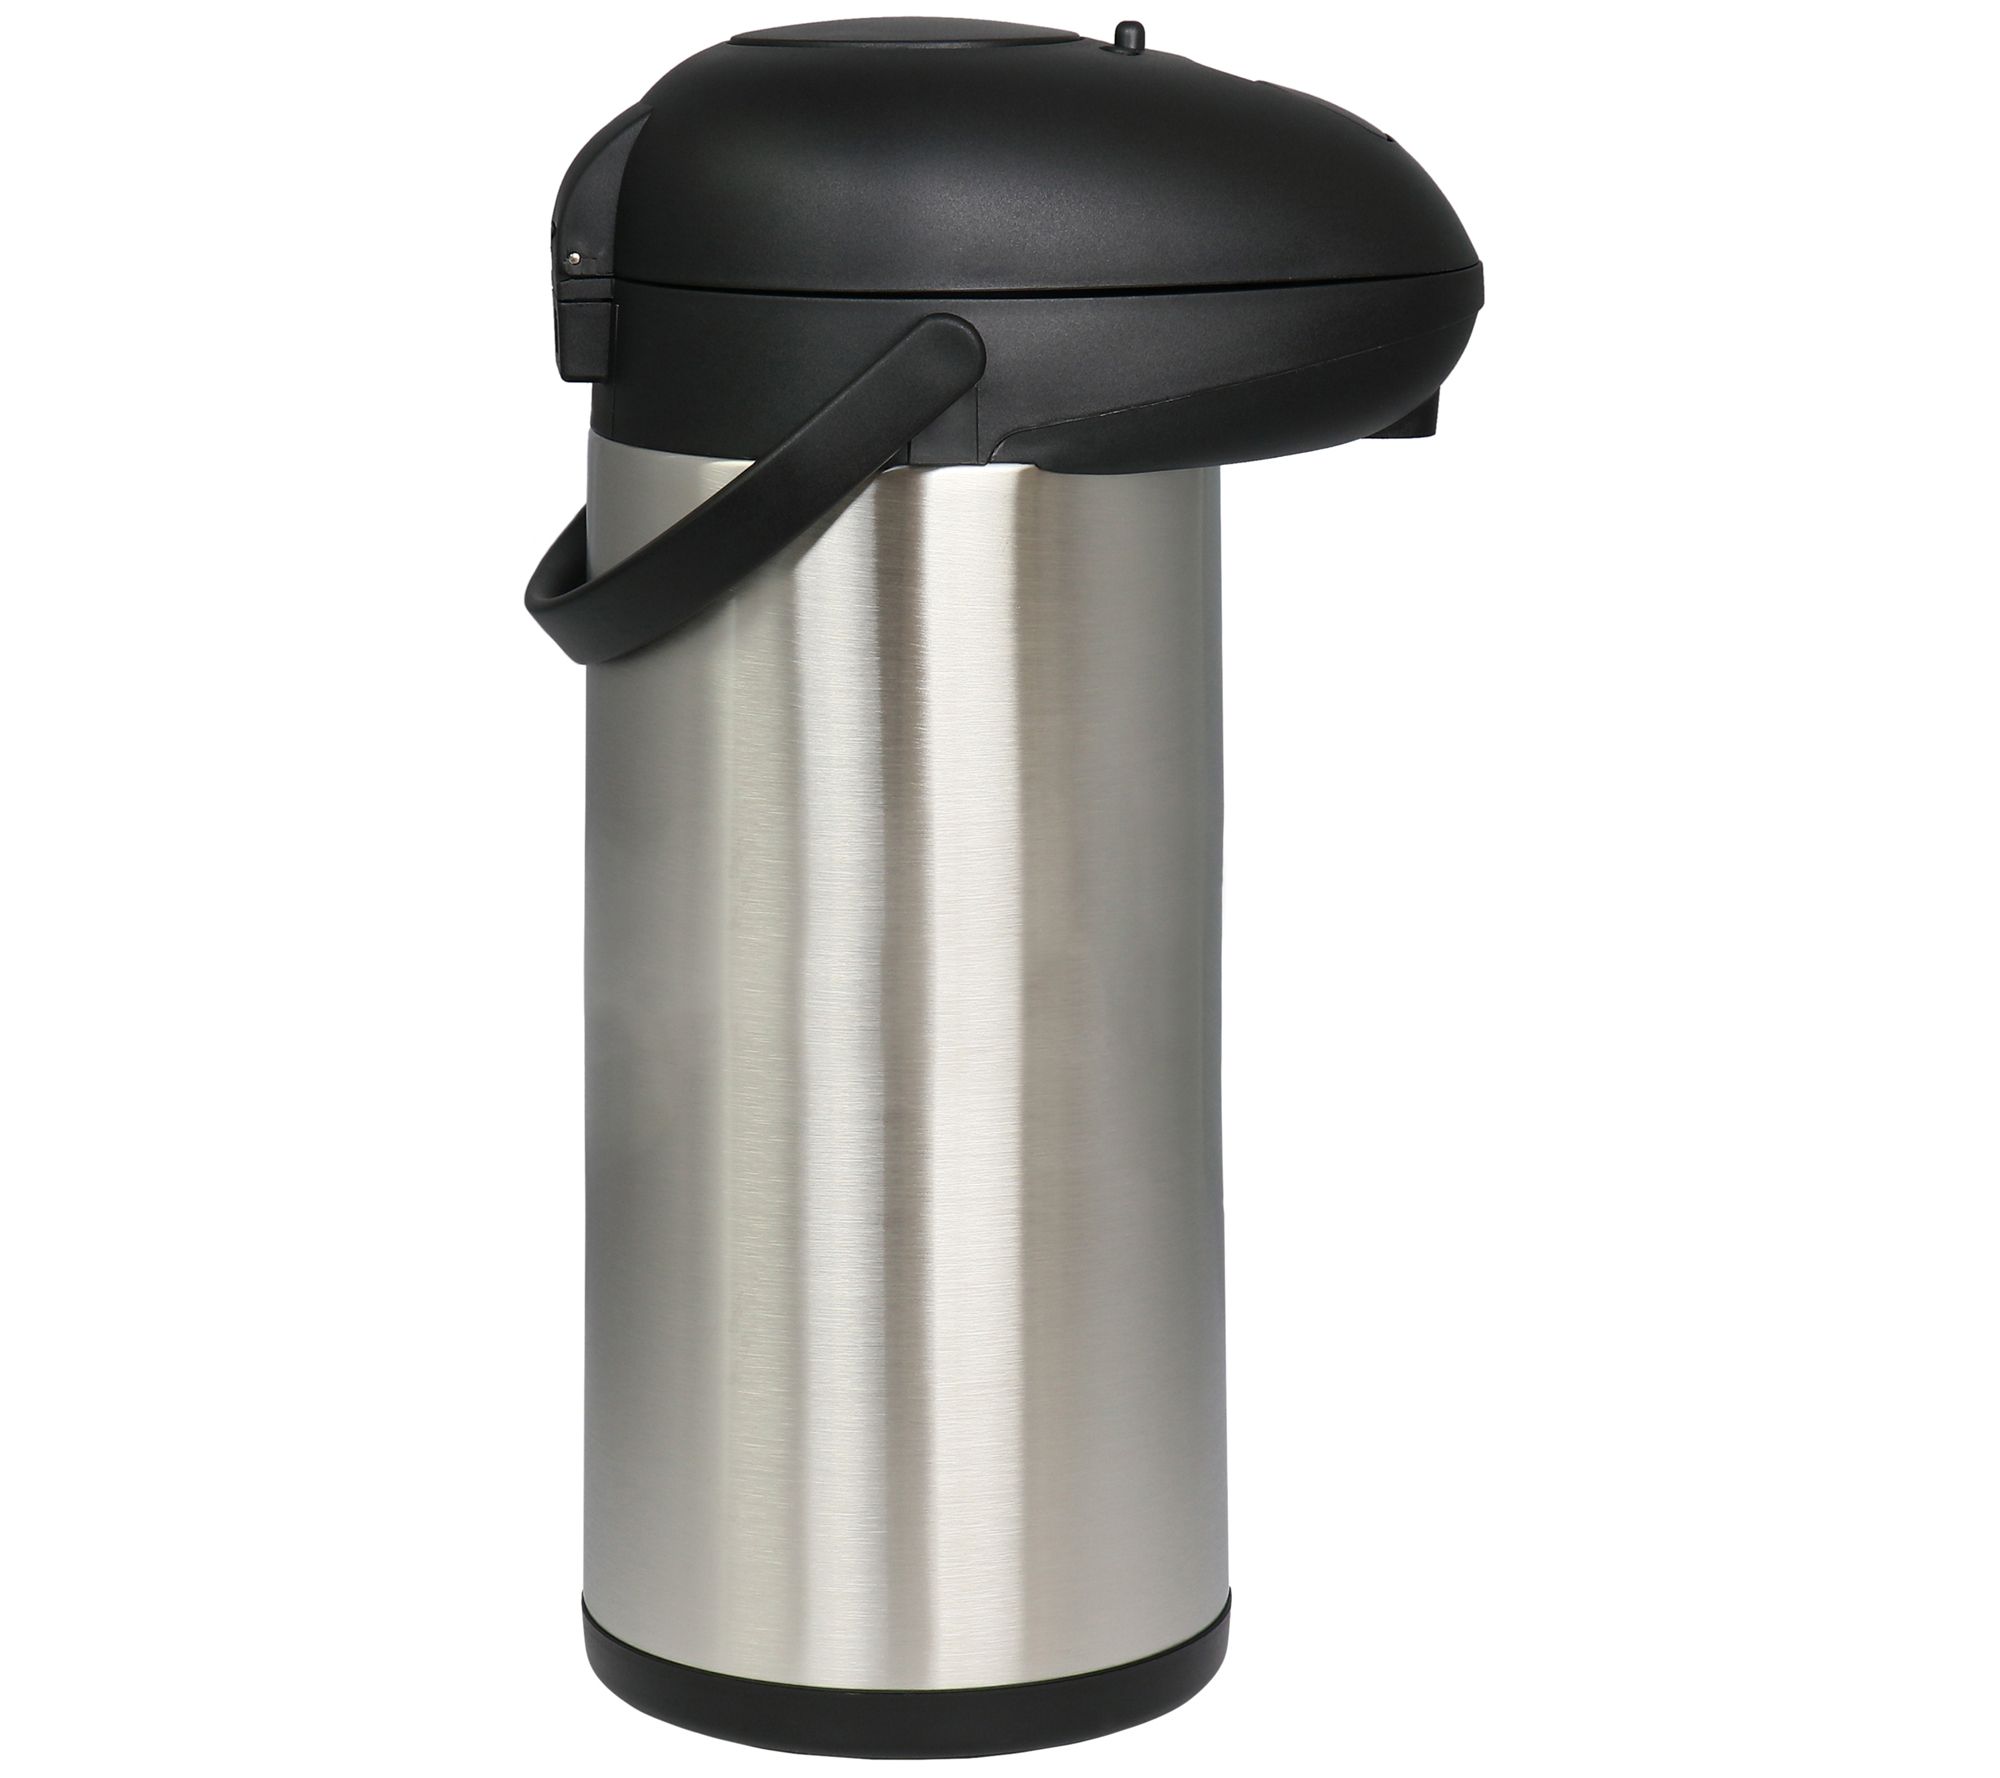 100% Genuine! THERMOS Vacuum Insulated 2qt Pump Pot - hot coffee